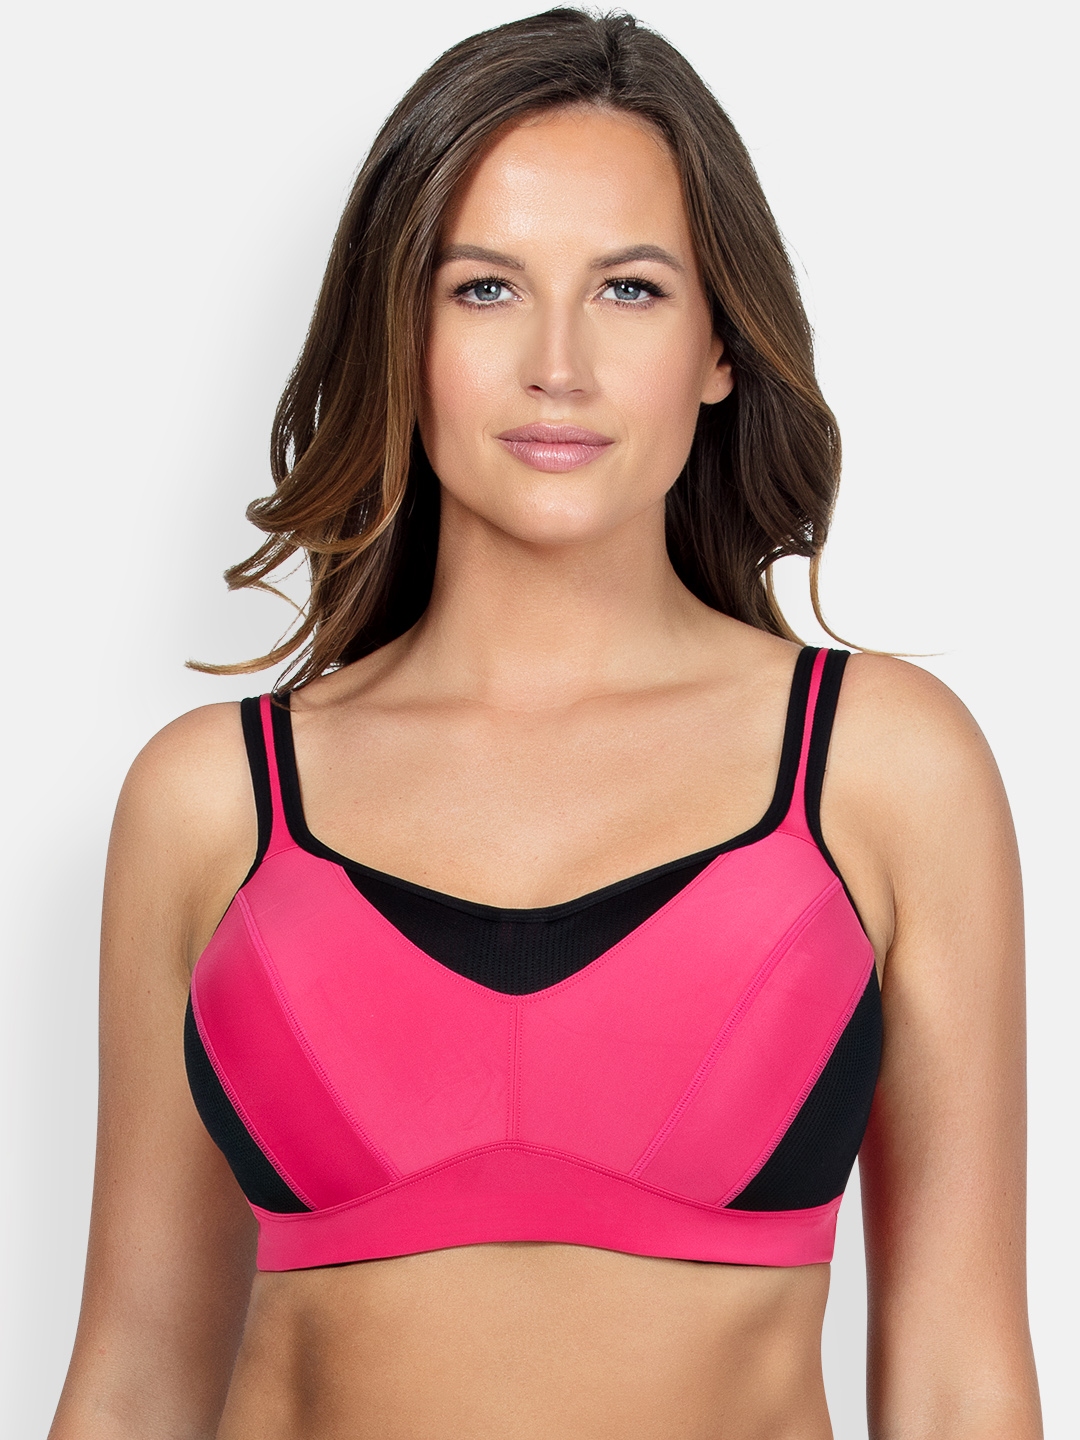 Buy PARFAIT Plus Size Pink Black Colourblocked Underwired Lightly